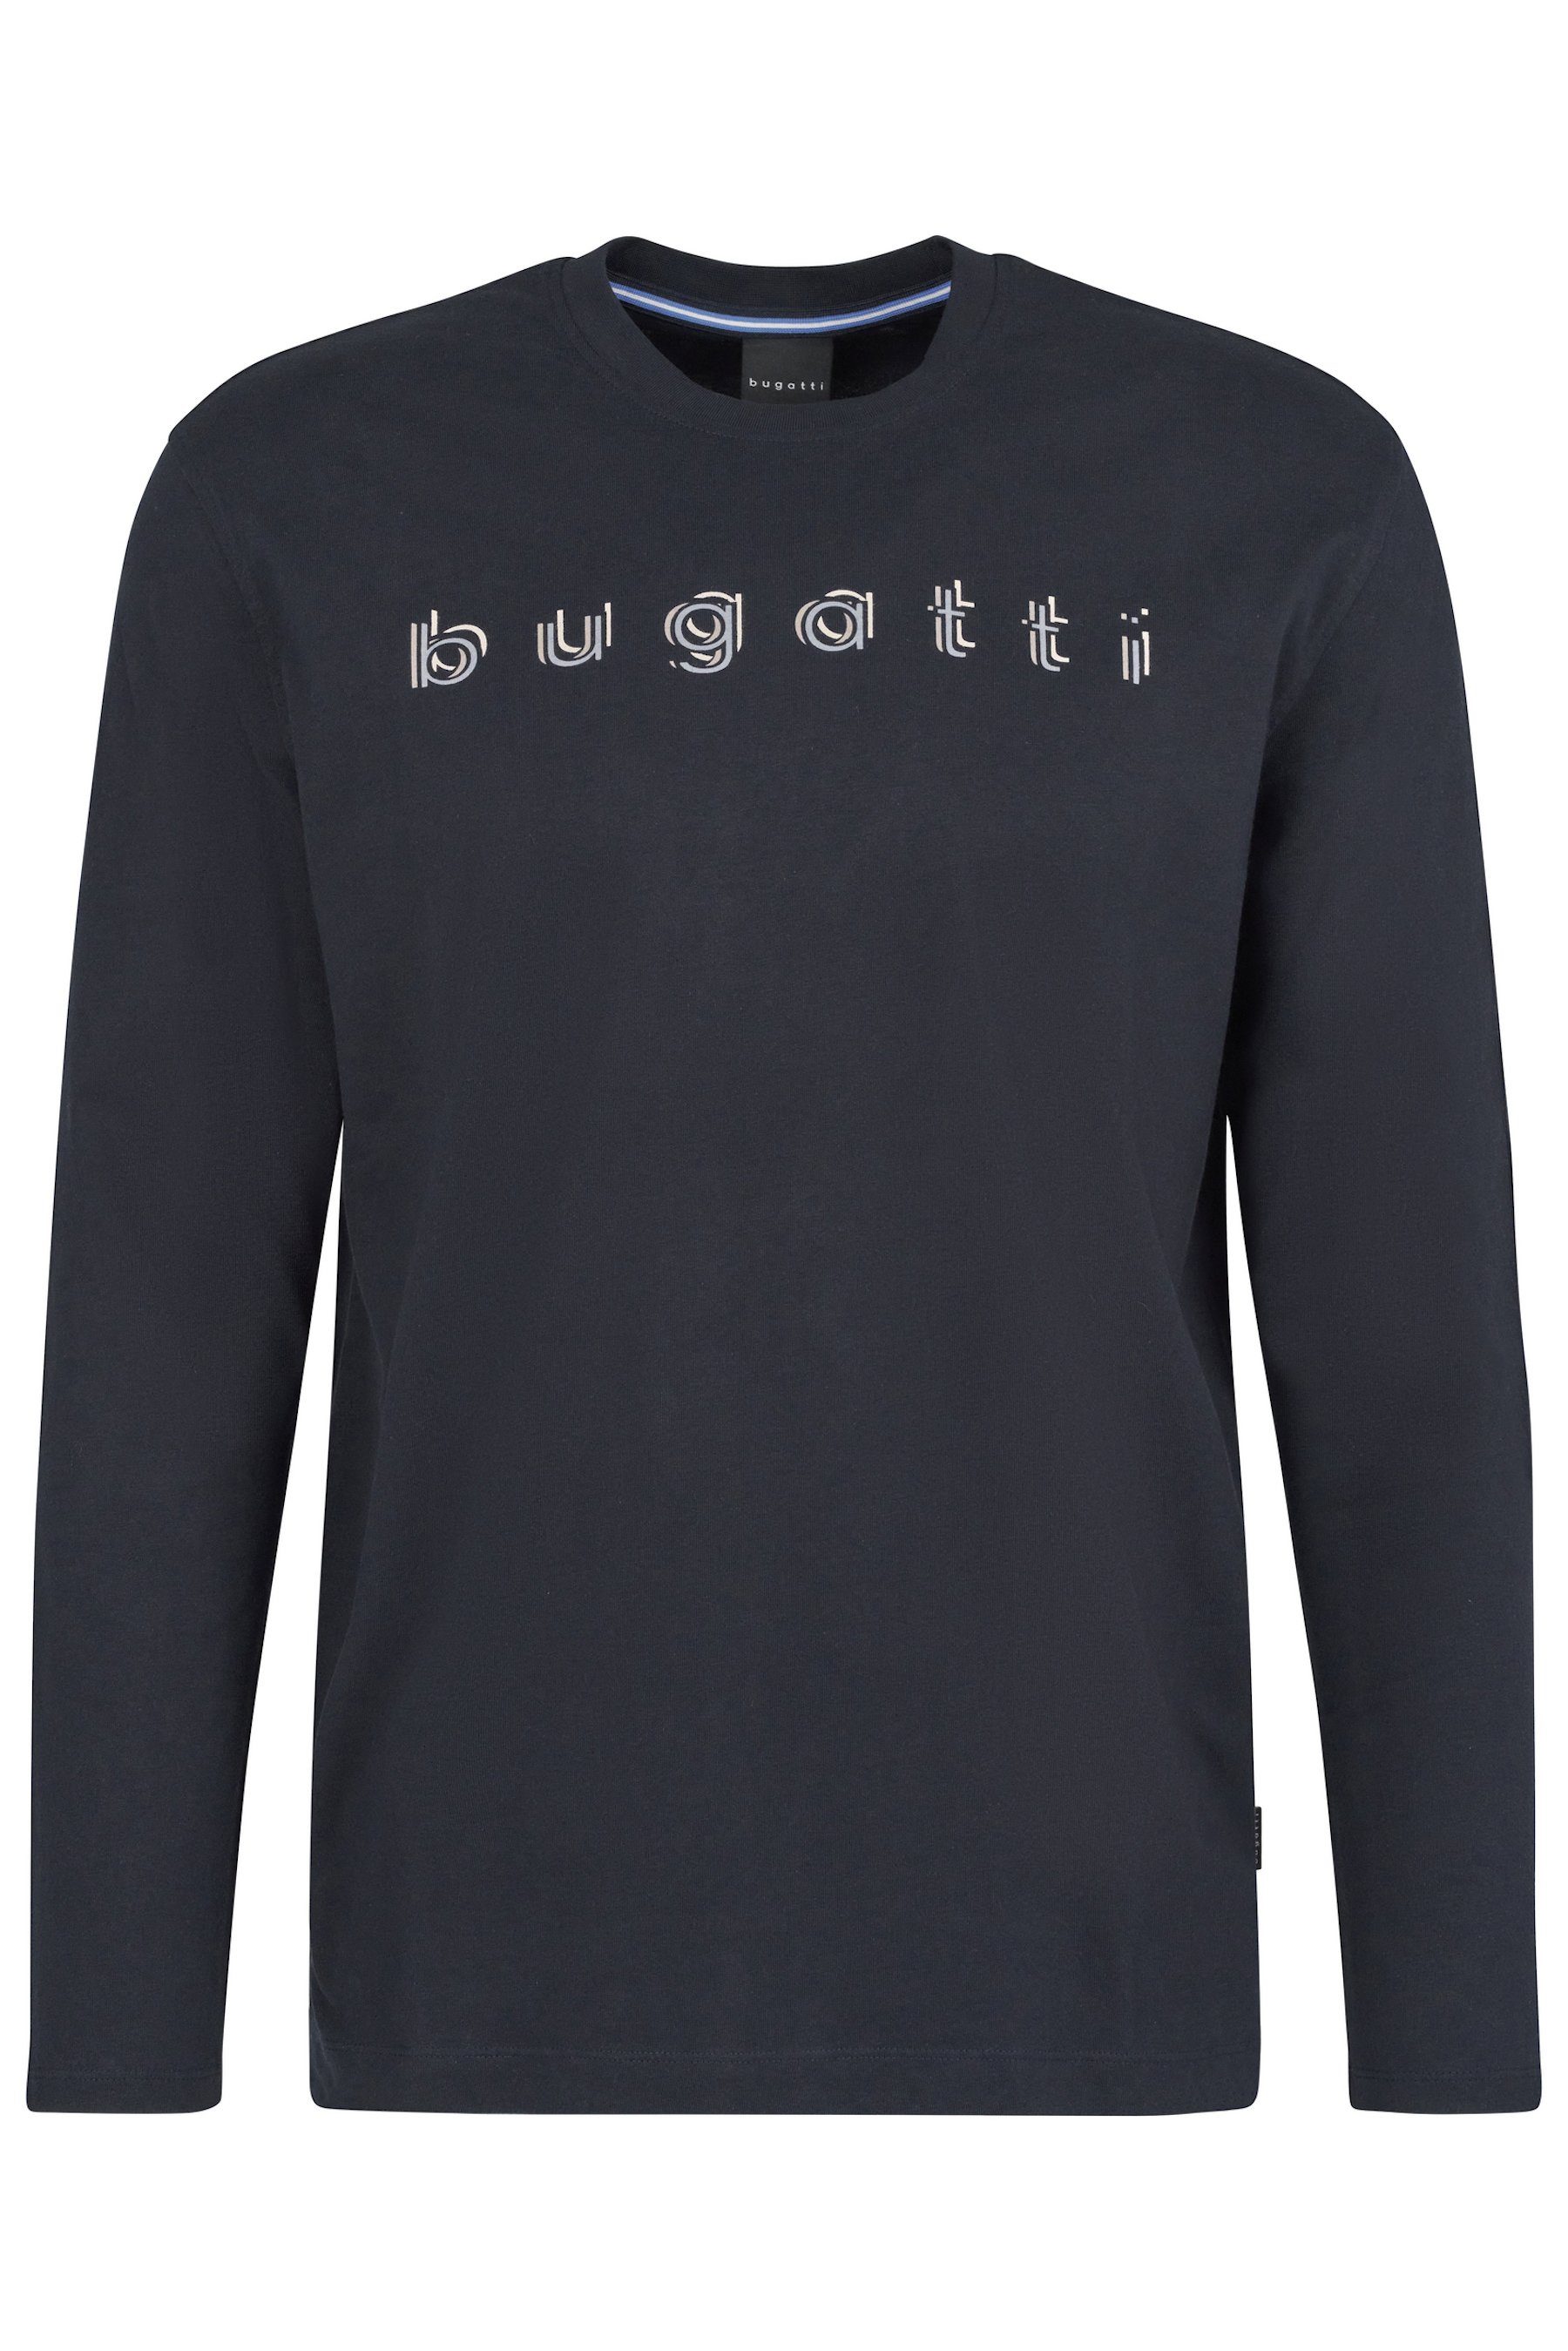 Bugatti Lang sweatshirt